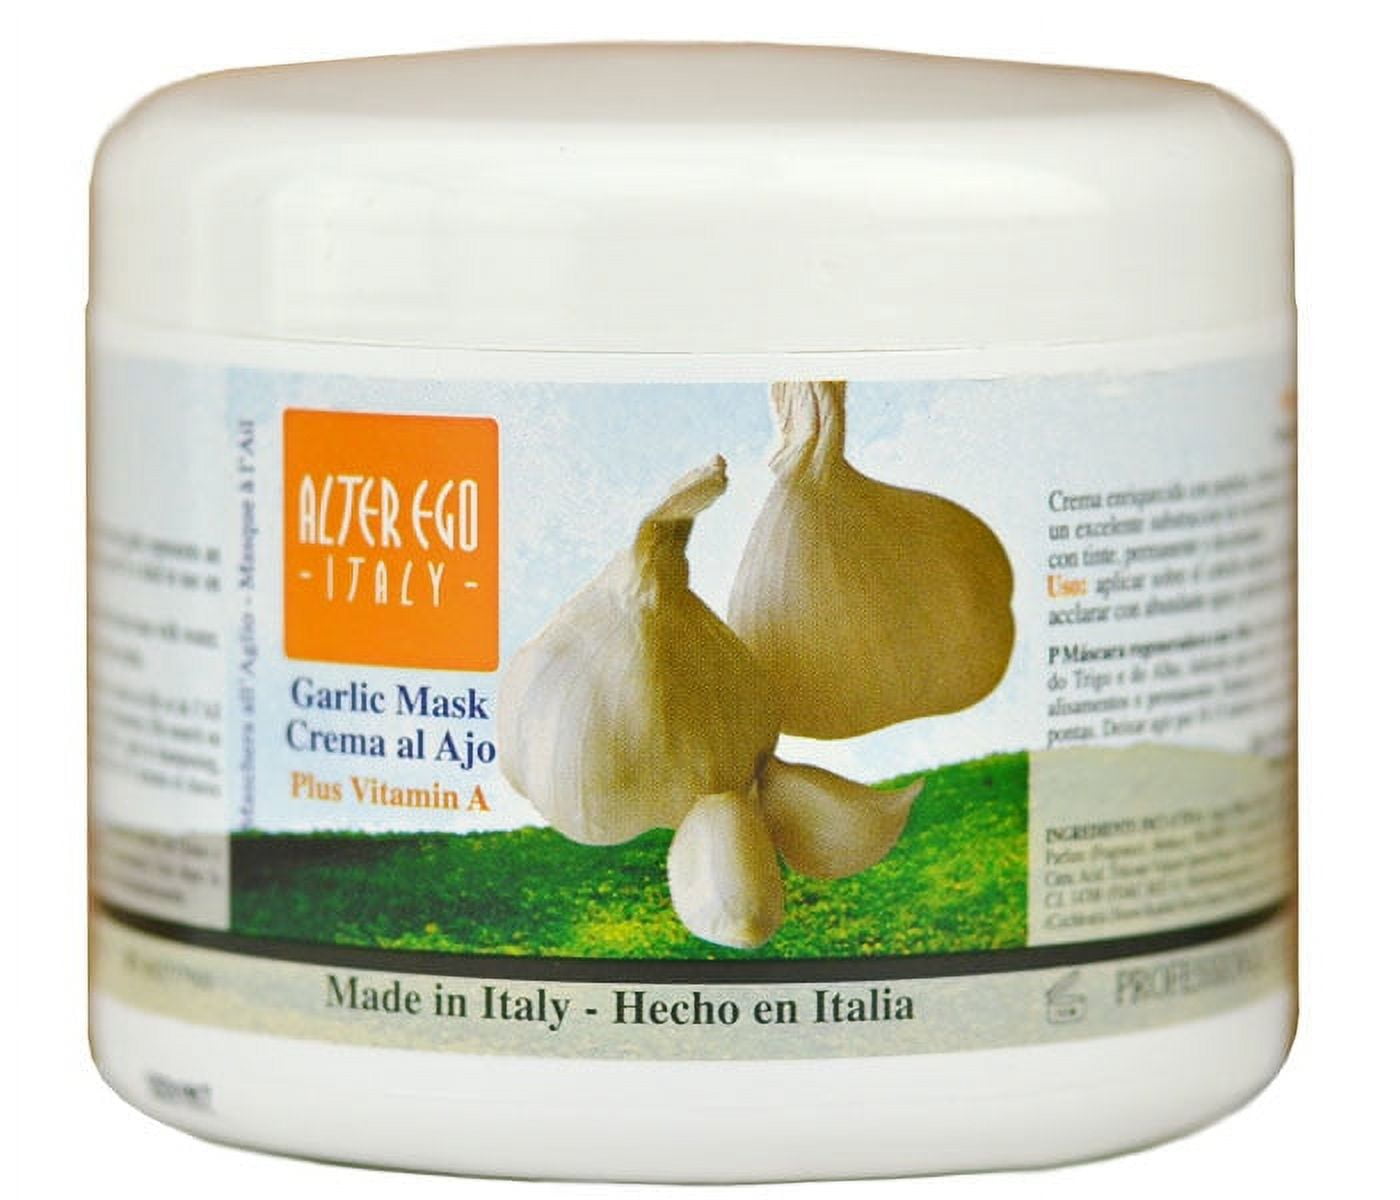 Alter Ego Garlic Mask Hot Oil Treatment With Garlic Size 33 8 Oz Liter